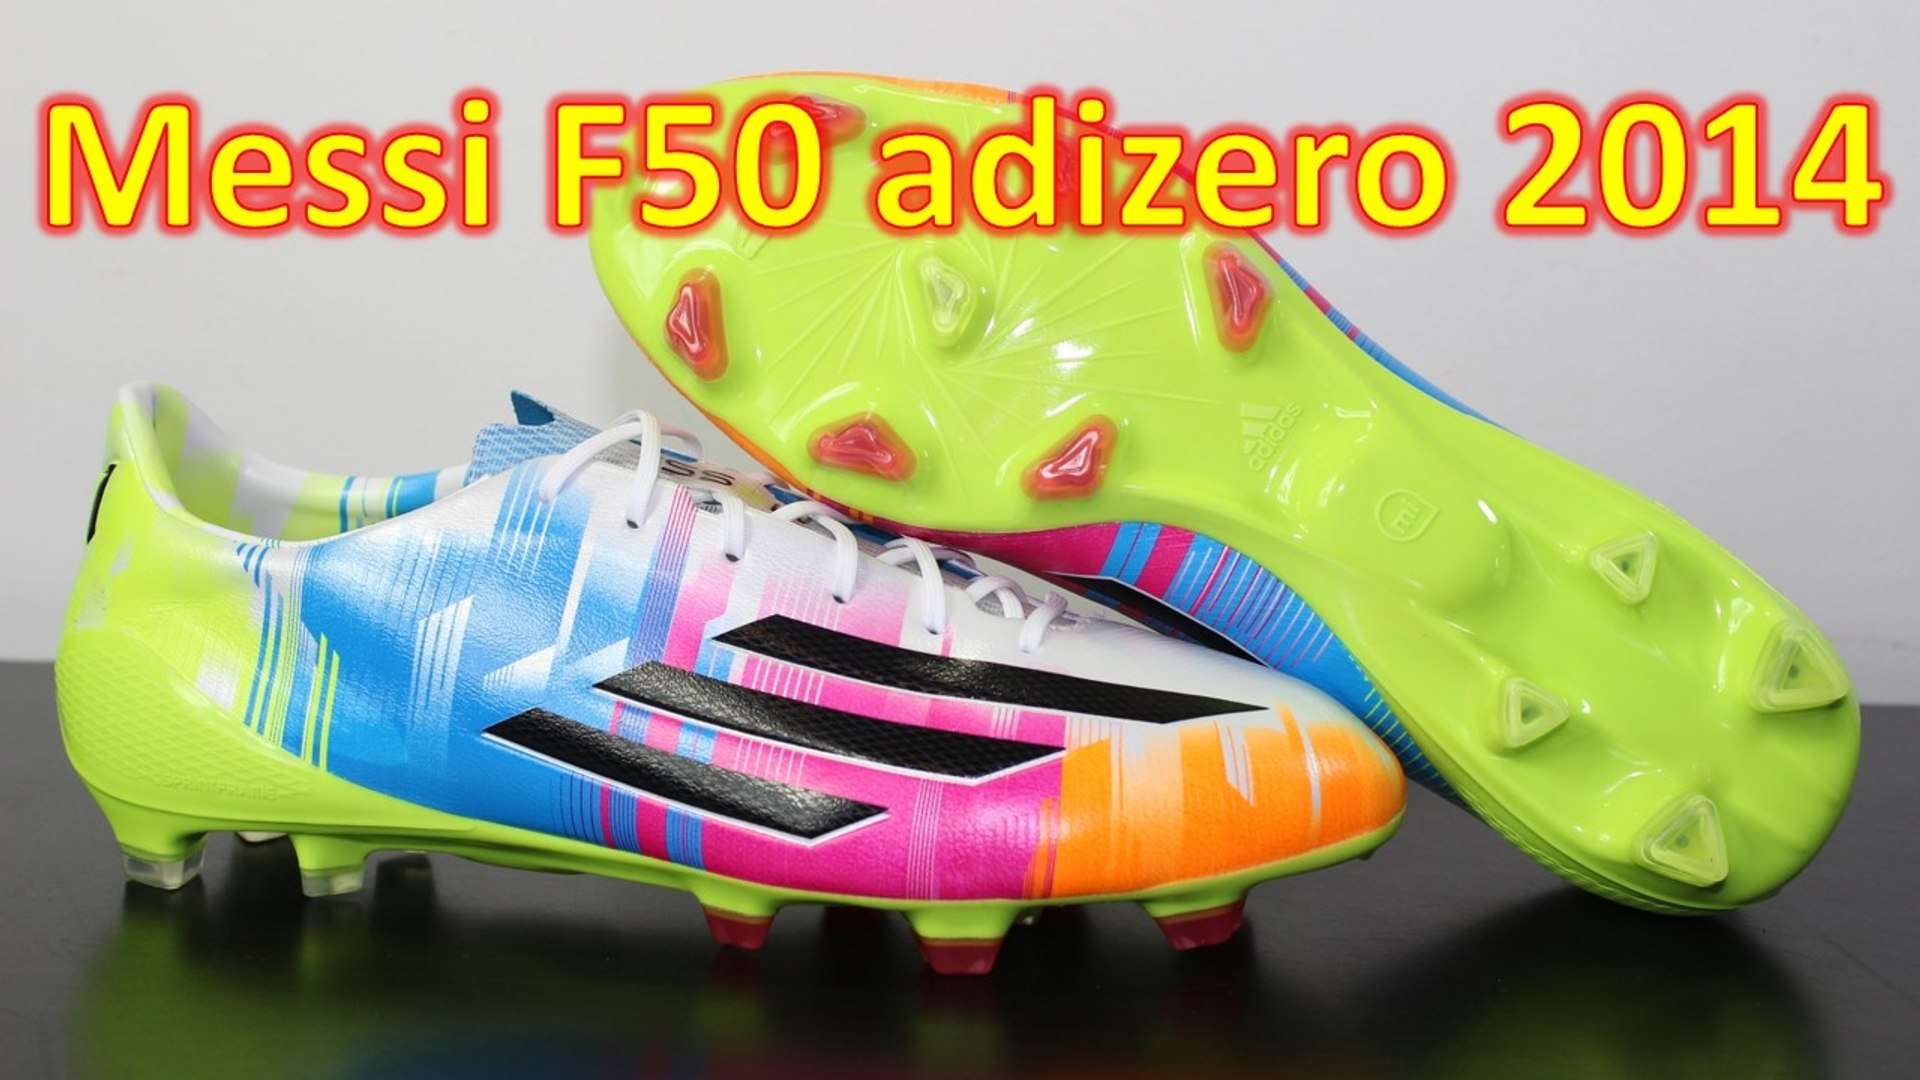 Messi Edition Adidas F50 adizero 2014 - Unboxing + On Feet - video  Dailymotion